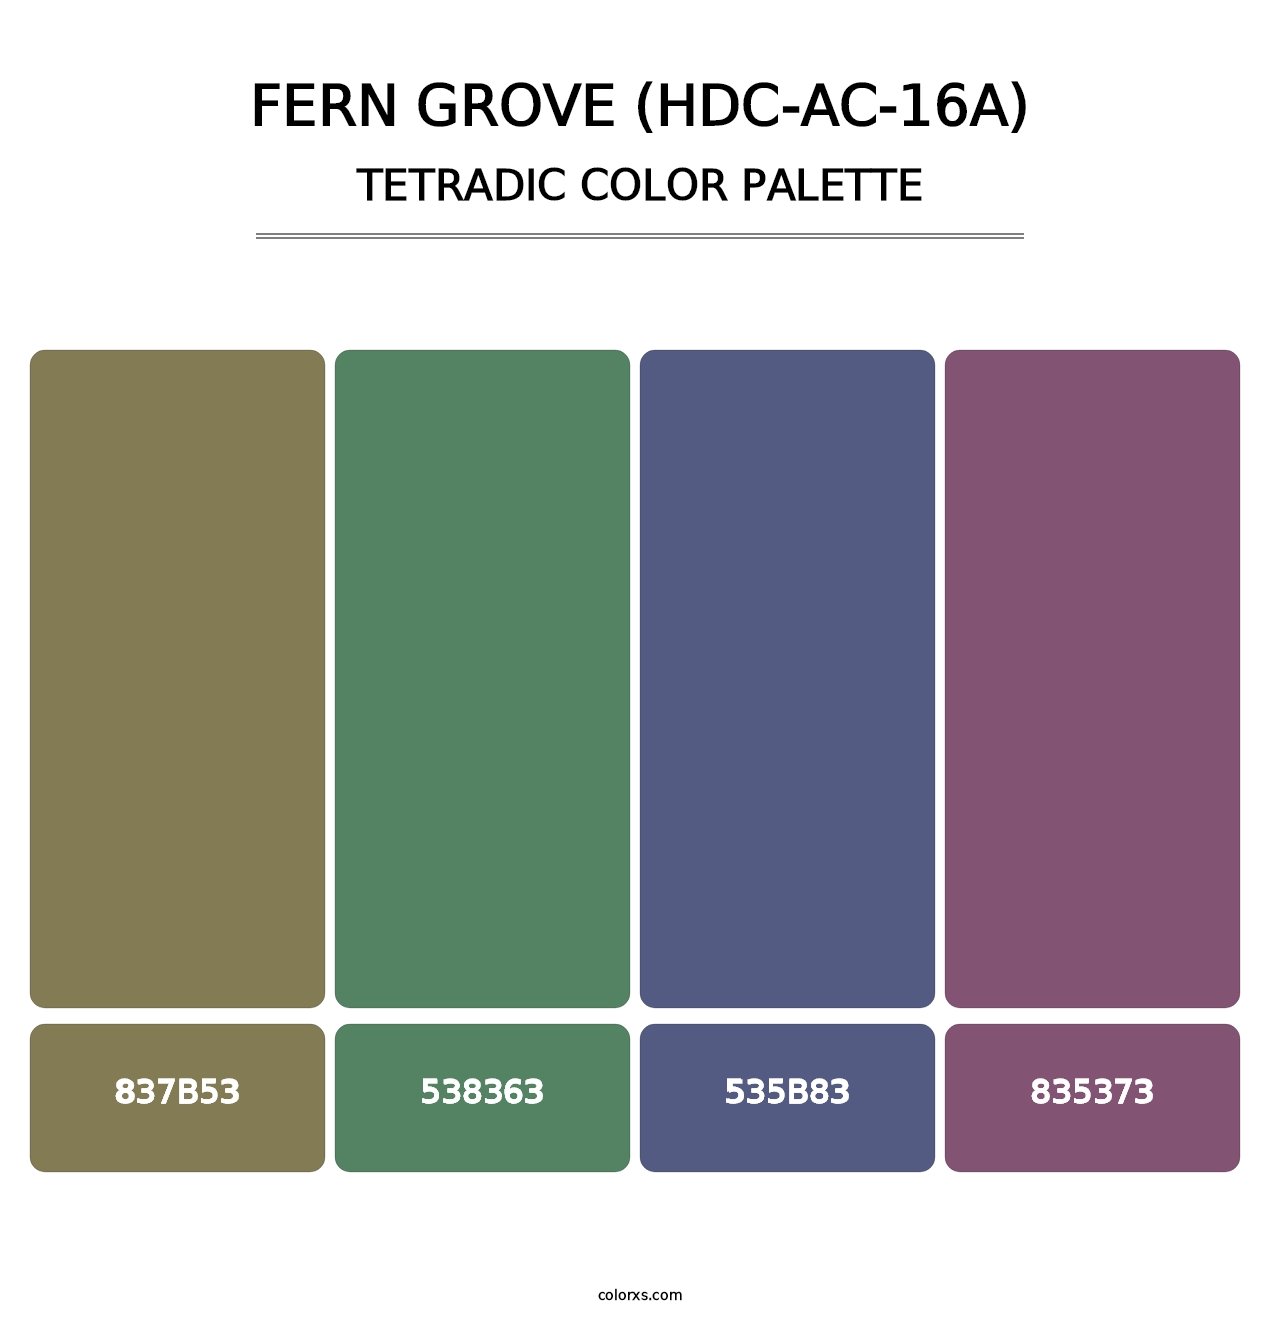 Fern Grove (HDC-AC-16A) - Tetradic Color Palette